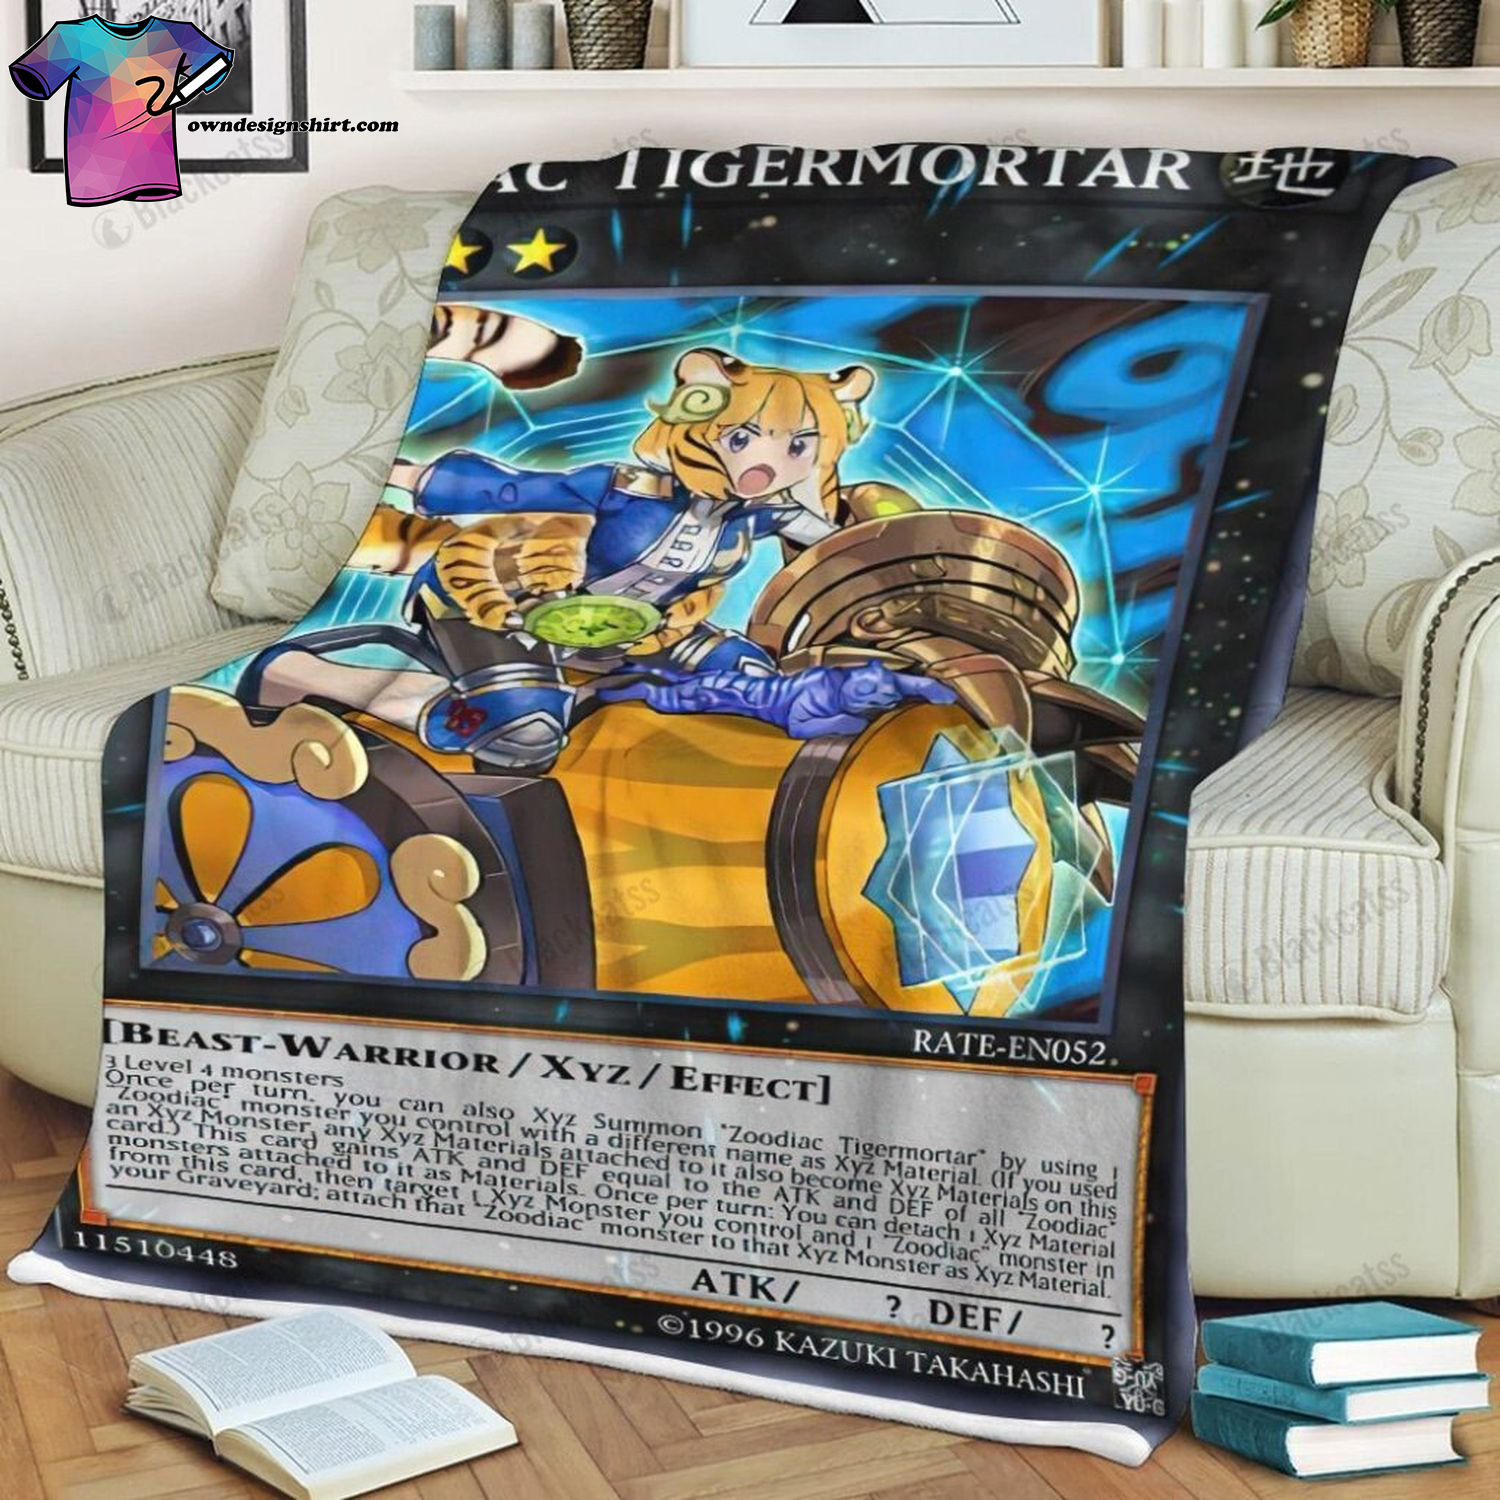 Game Yu-gi-oh Zoodiac Tigermortar Full Print Soft Blanket